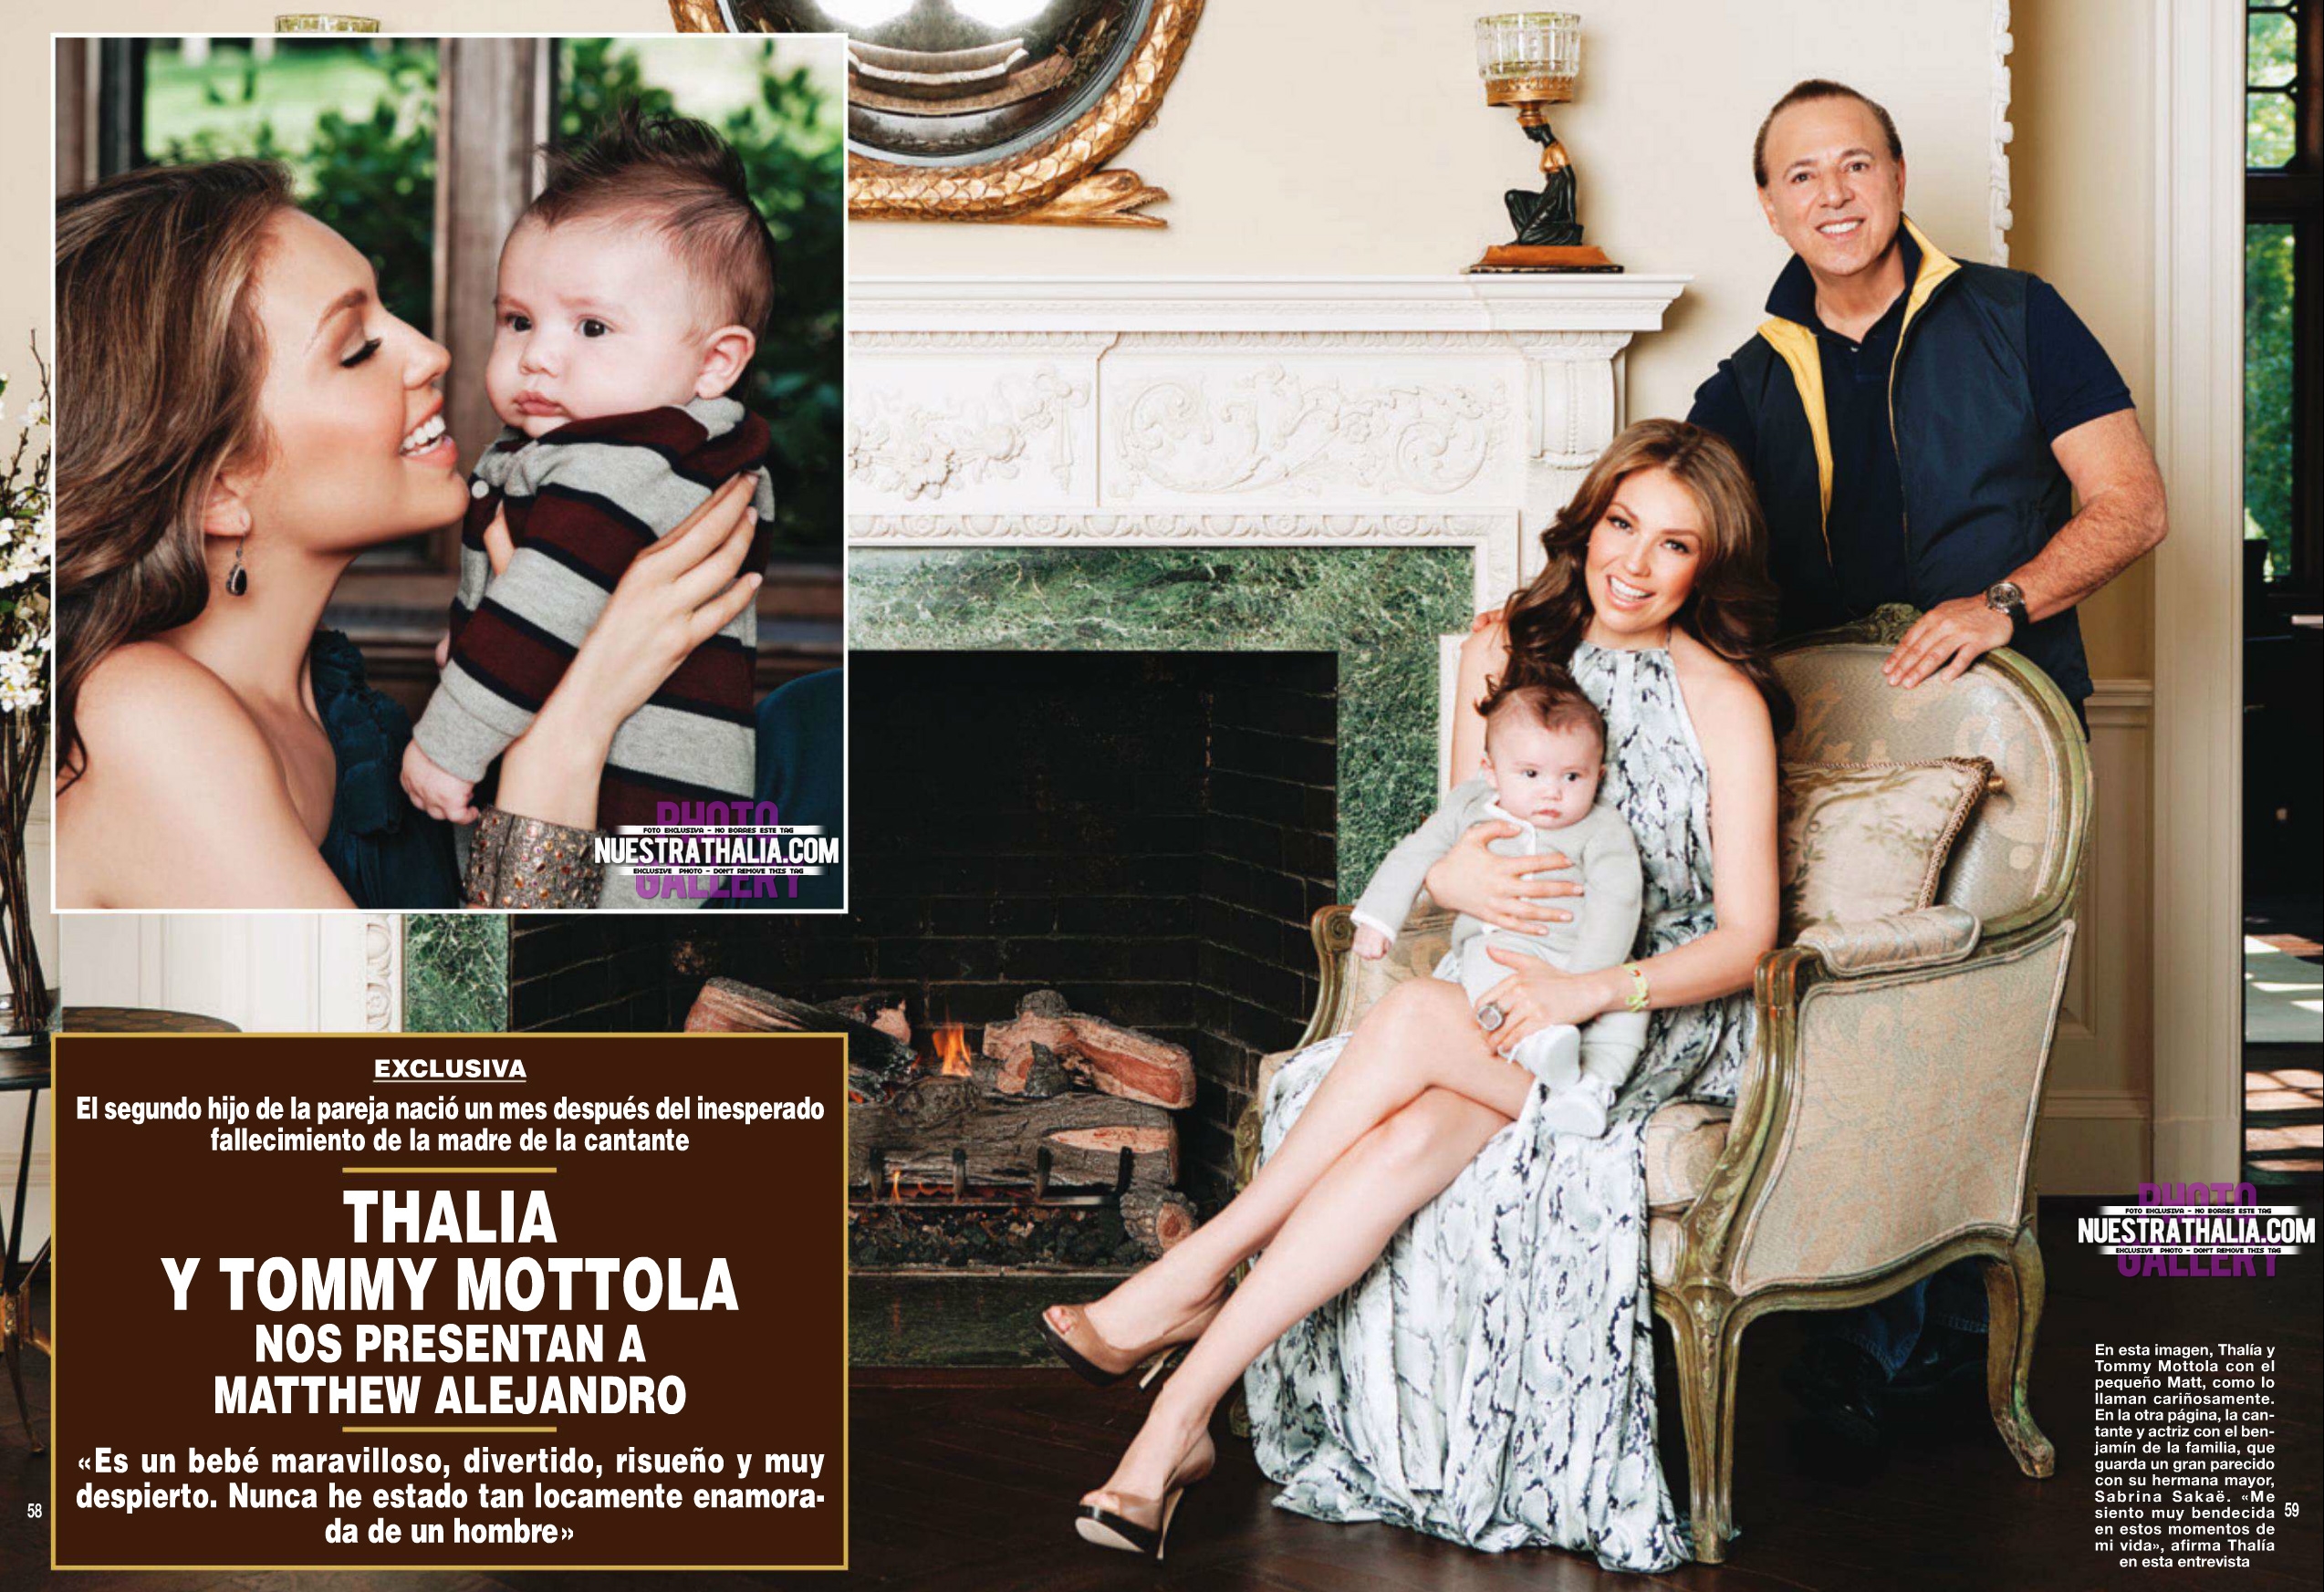 thaliahq0002 Η Thalia μας παρουσιάζει τον γιο της Matthew Alejandro!Δείτε πλούσιο φωτορεπορτάζ!